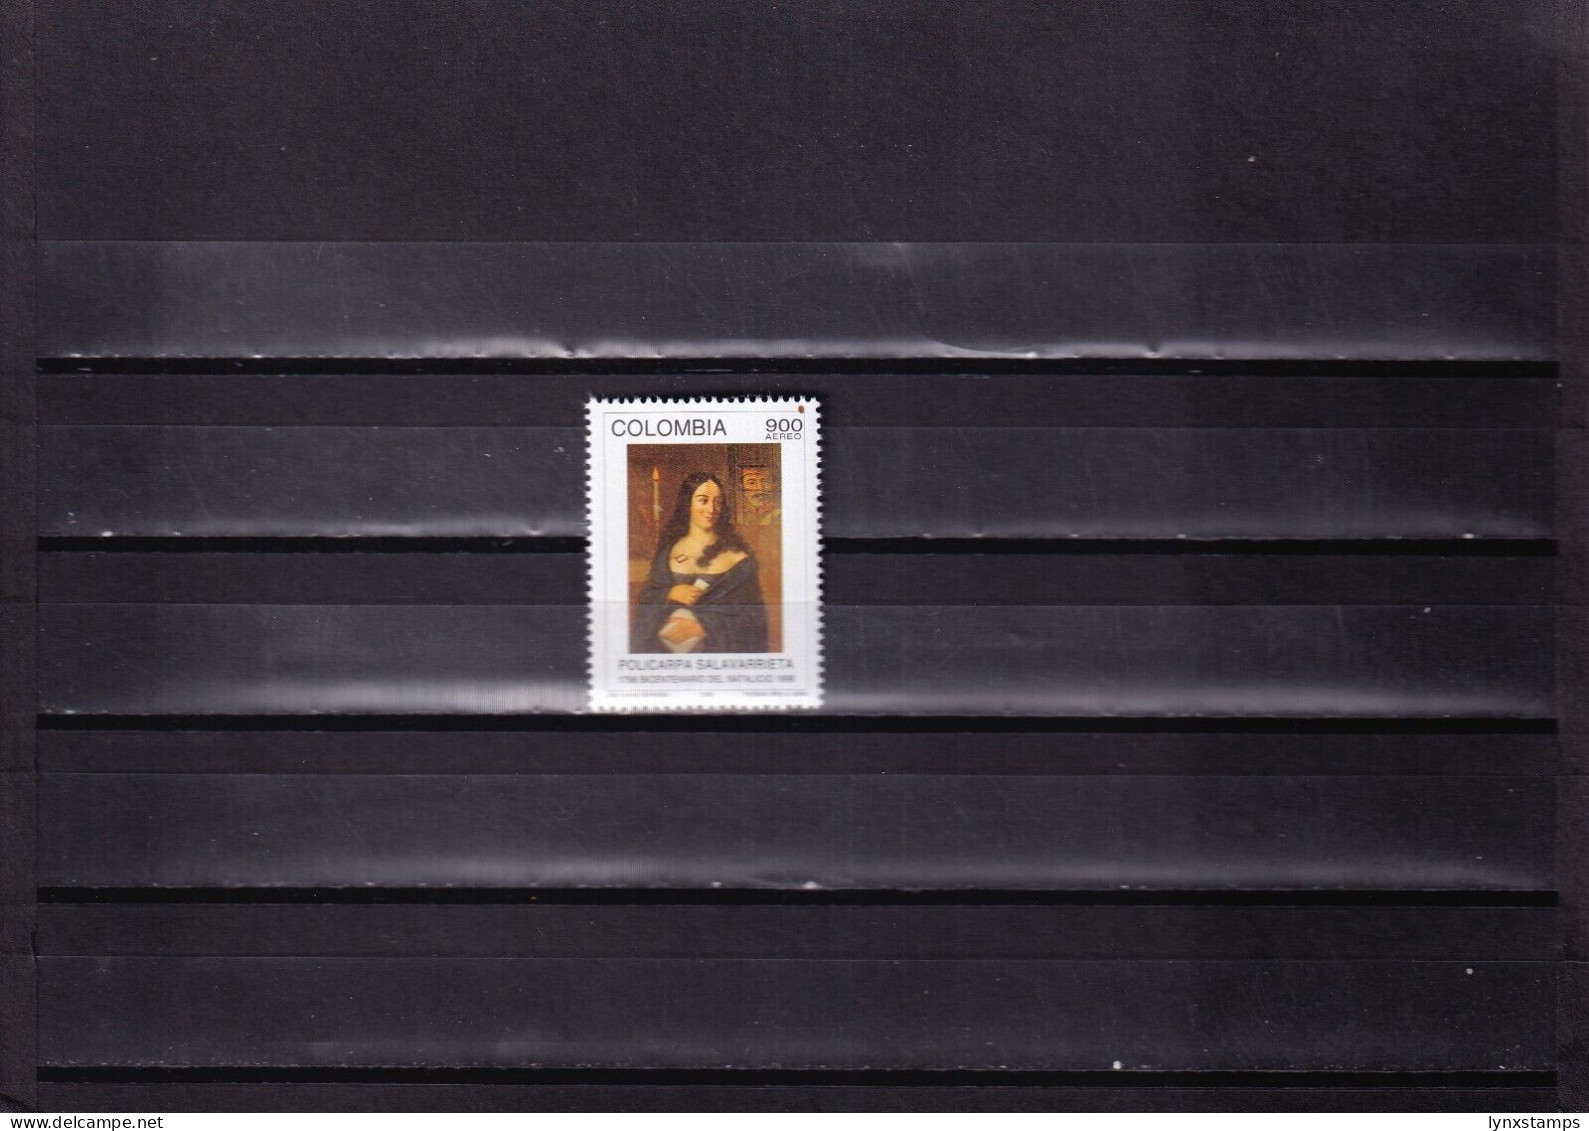 ER03 Colombia 1996 Policarpa Salavarrieta MNH Stamp - Colombie